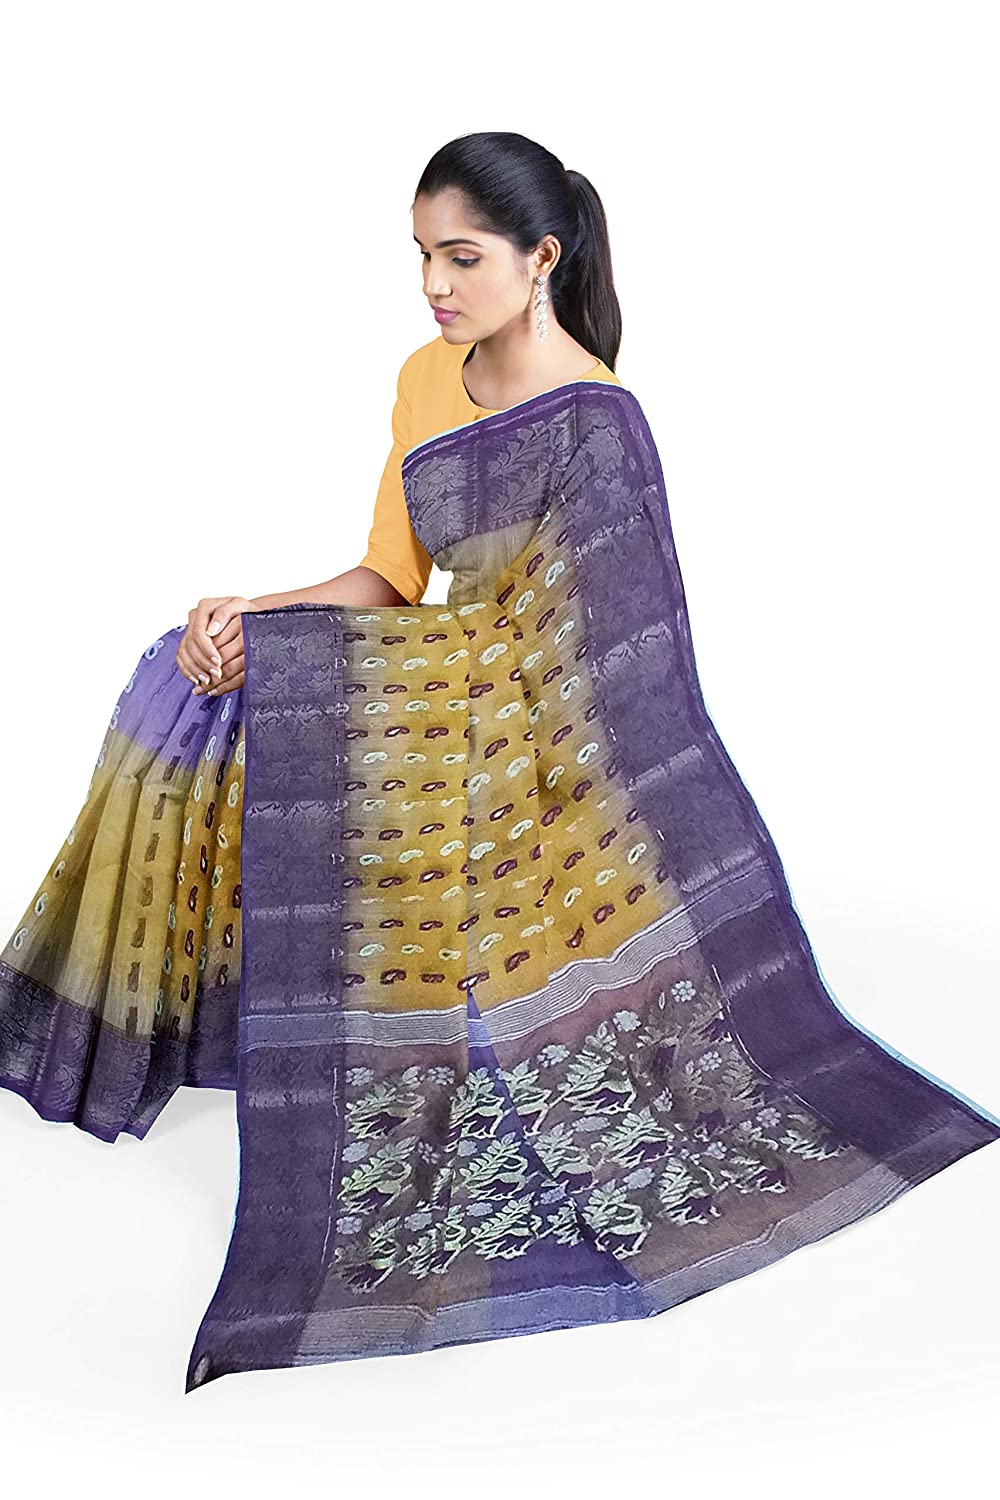 Pradip Fabrics Ethnic Women's Tant Silk Yellow and Blue Color Saree